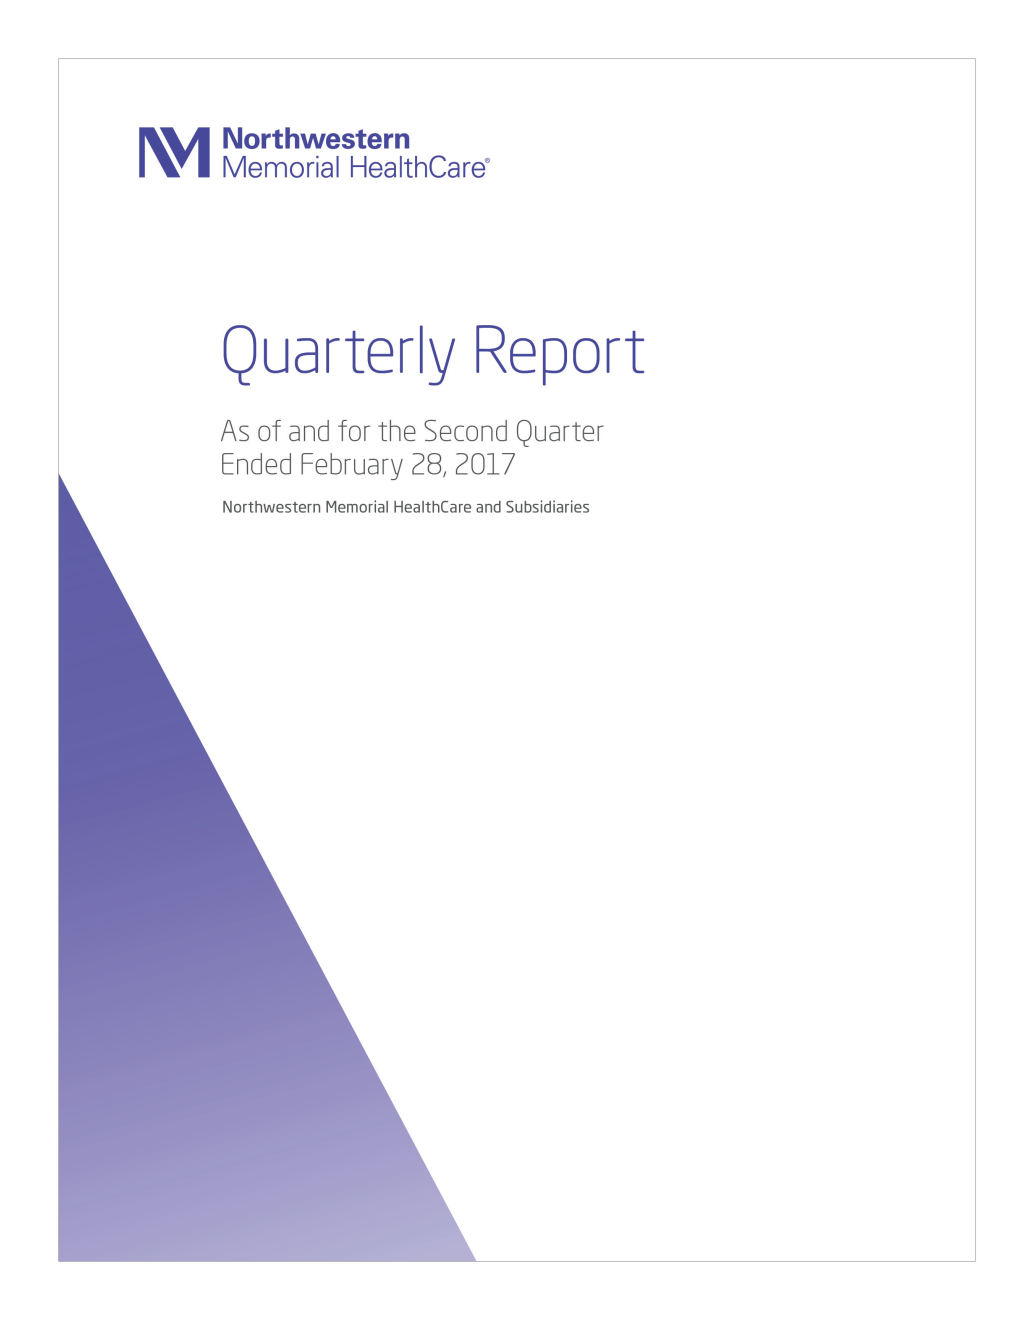 Q2 Quarterly Financial Statements